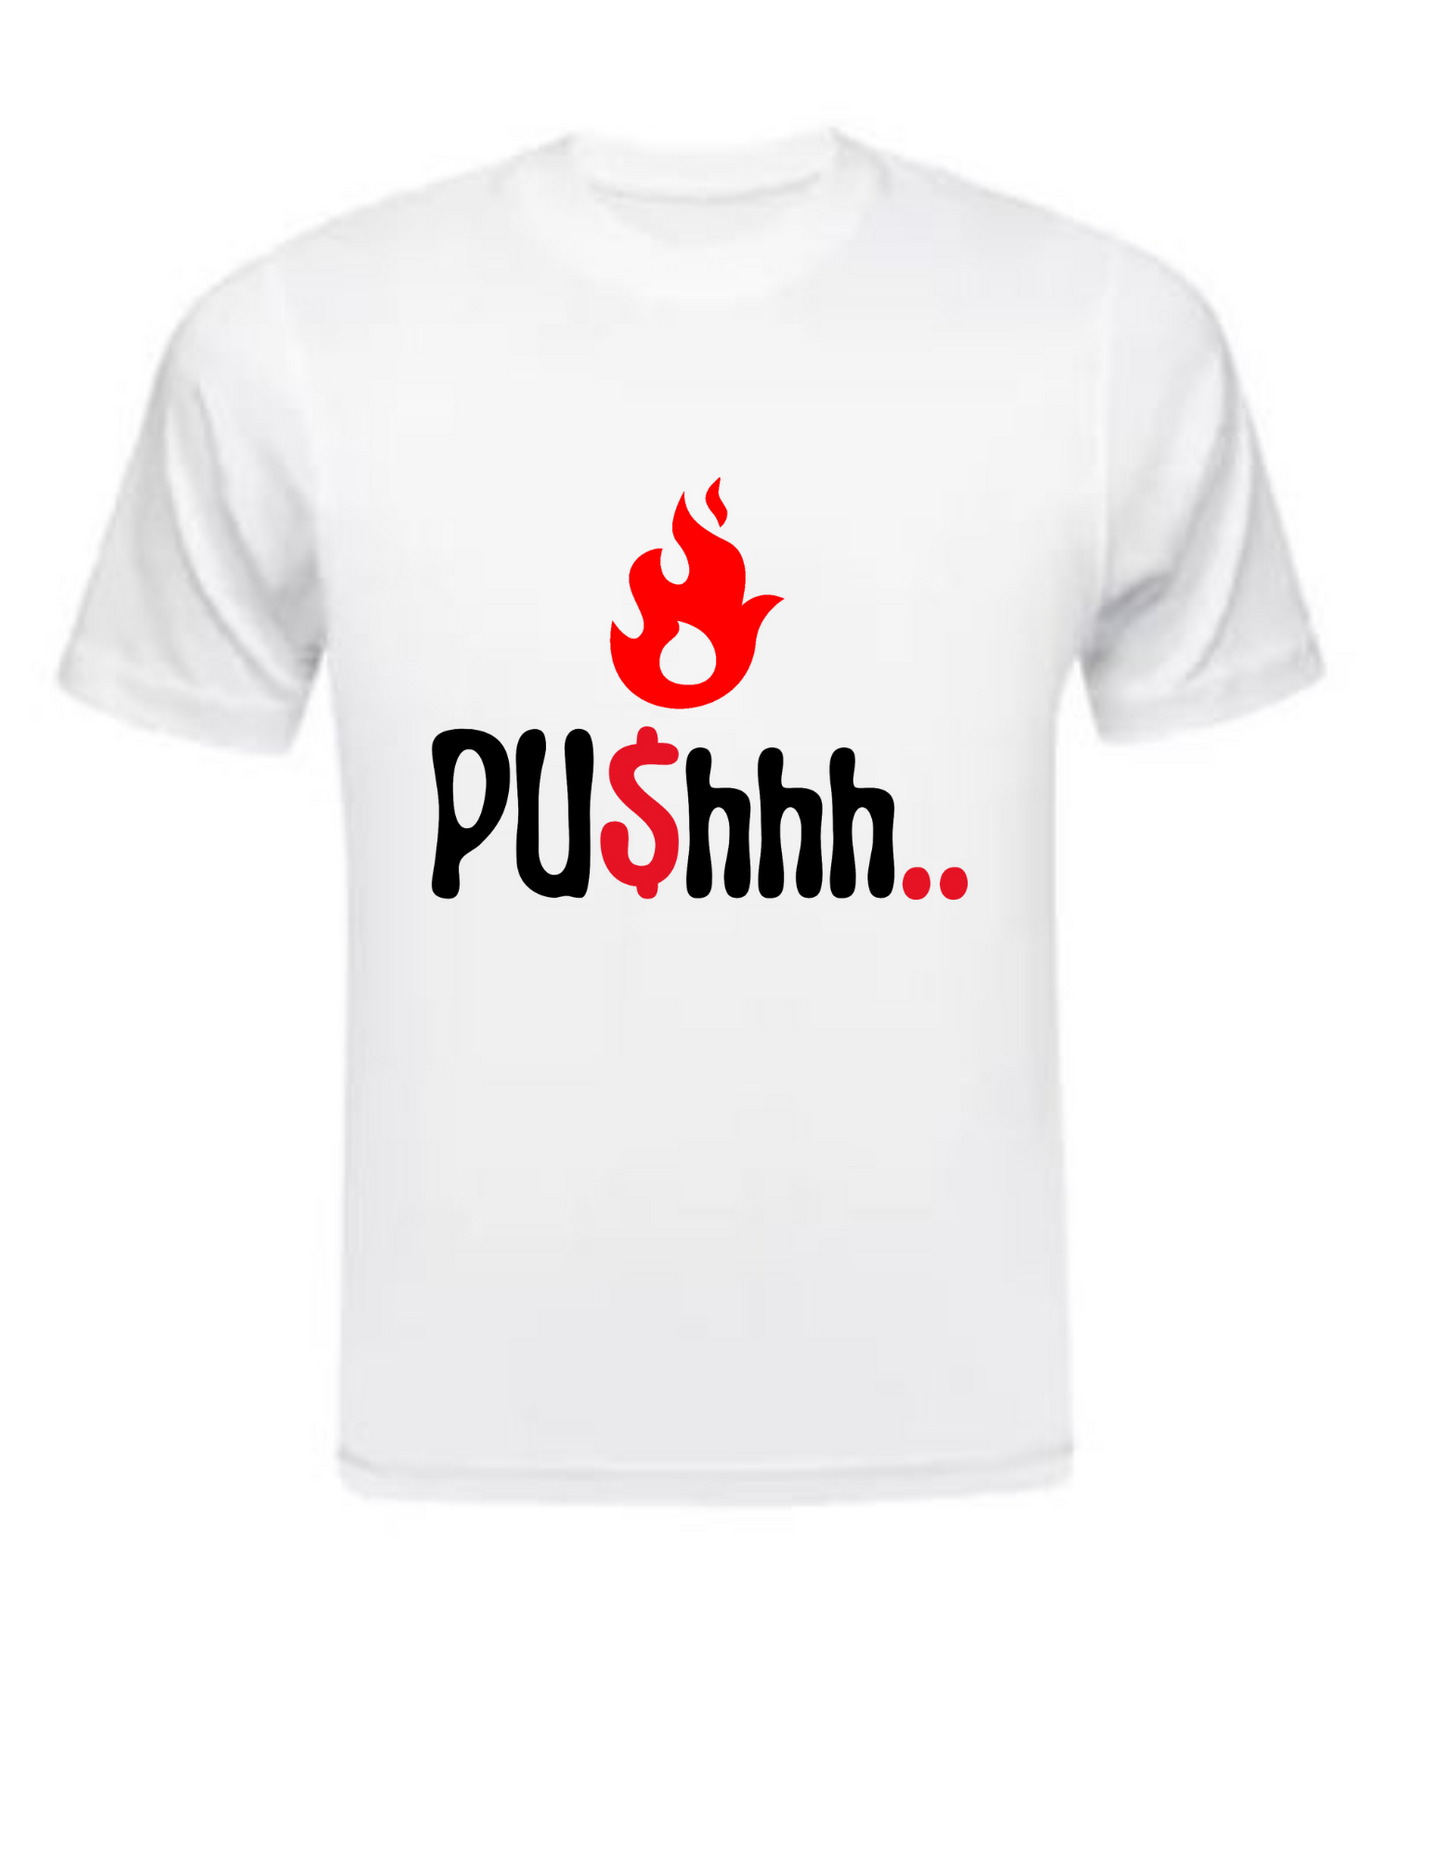 Unisex Short-Sleeve Pushhh T-Shirt